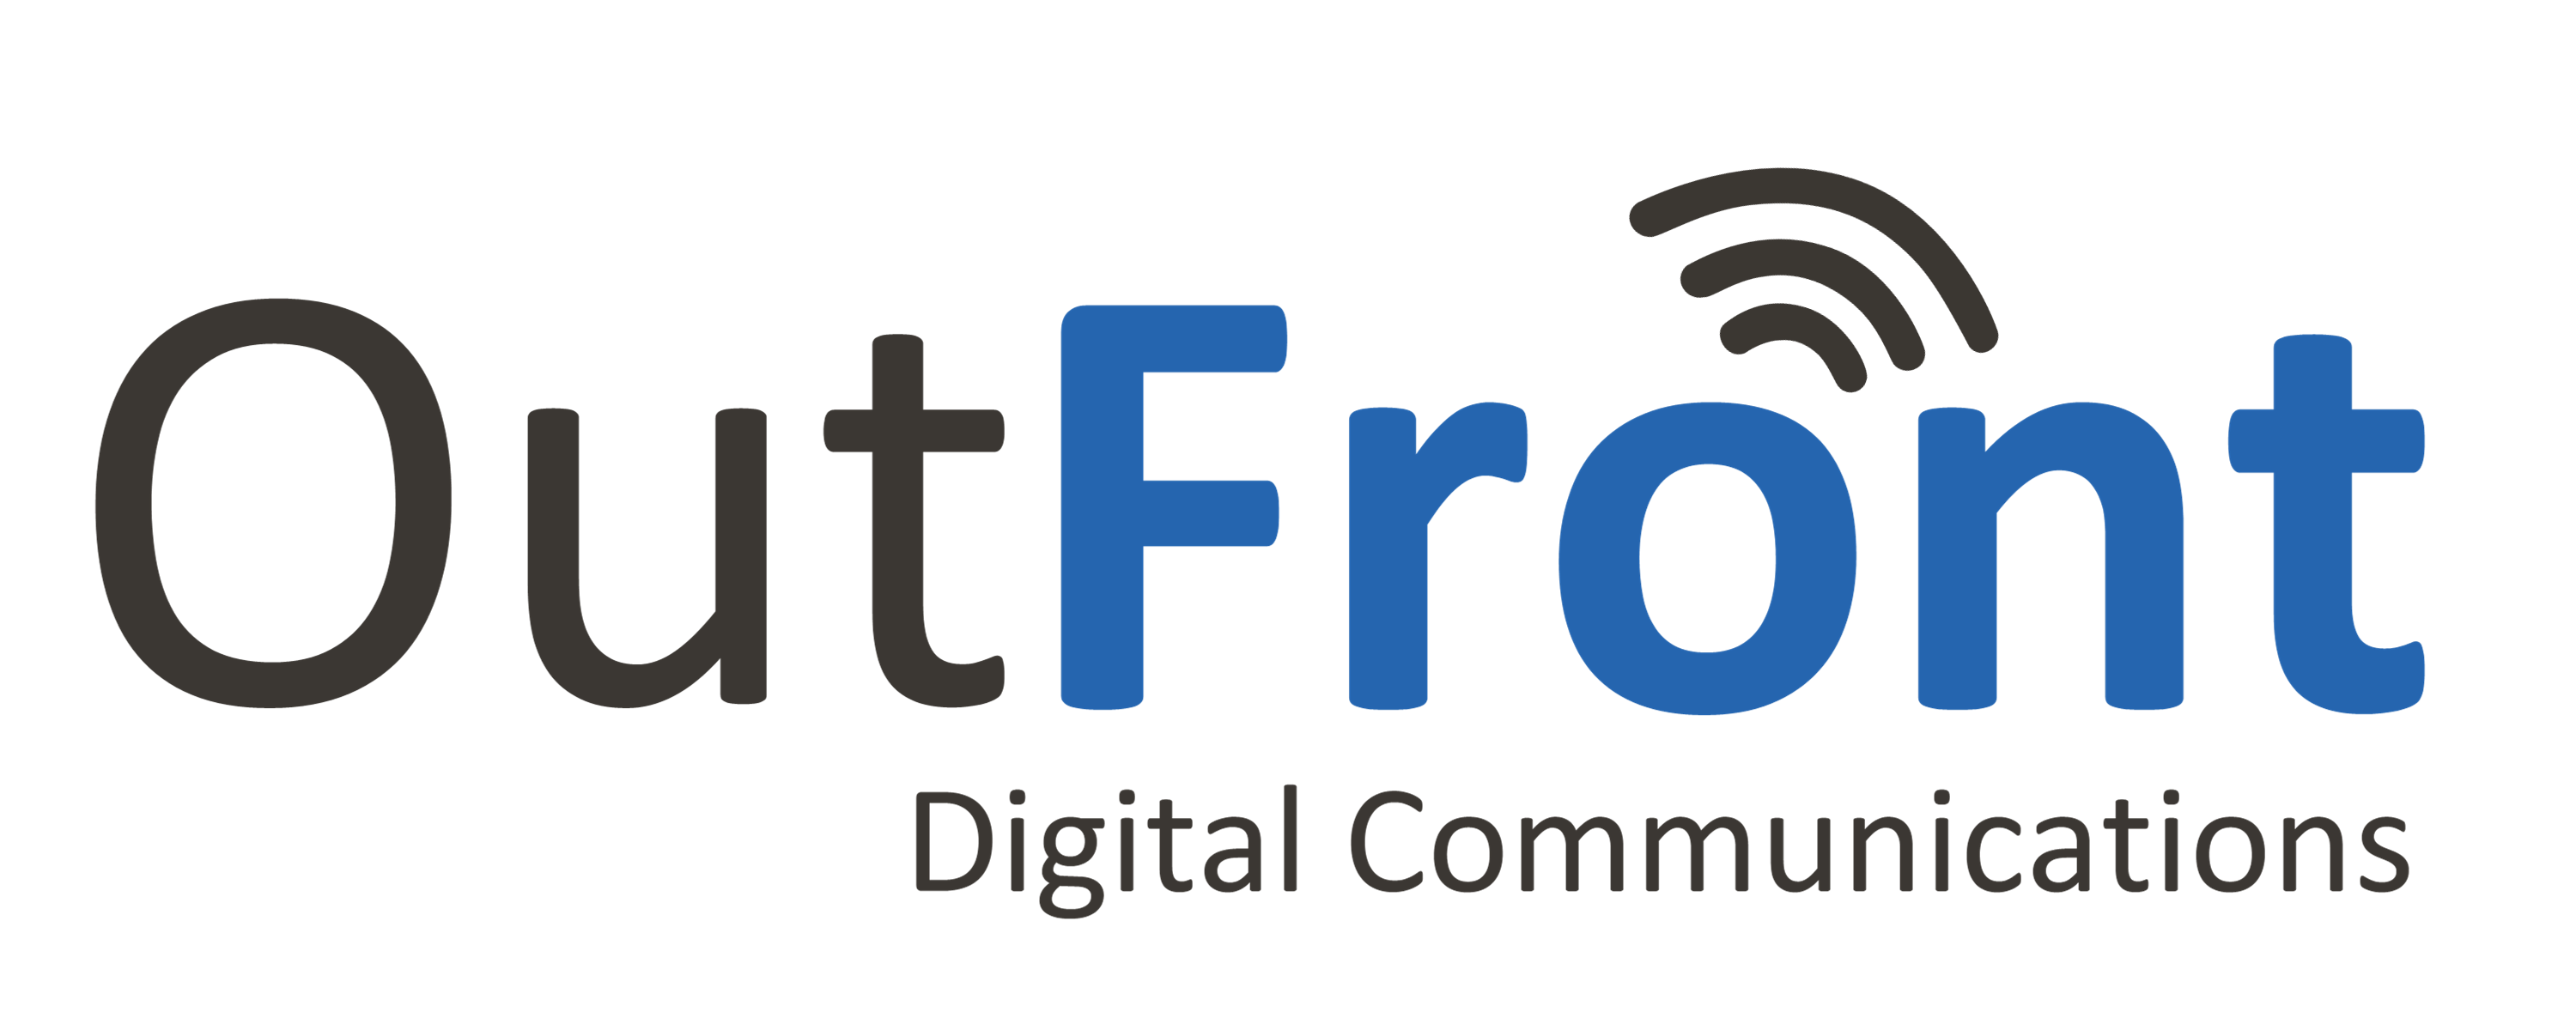 Digital Communication Logo - Home Front Digital Communications Digital Signage